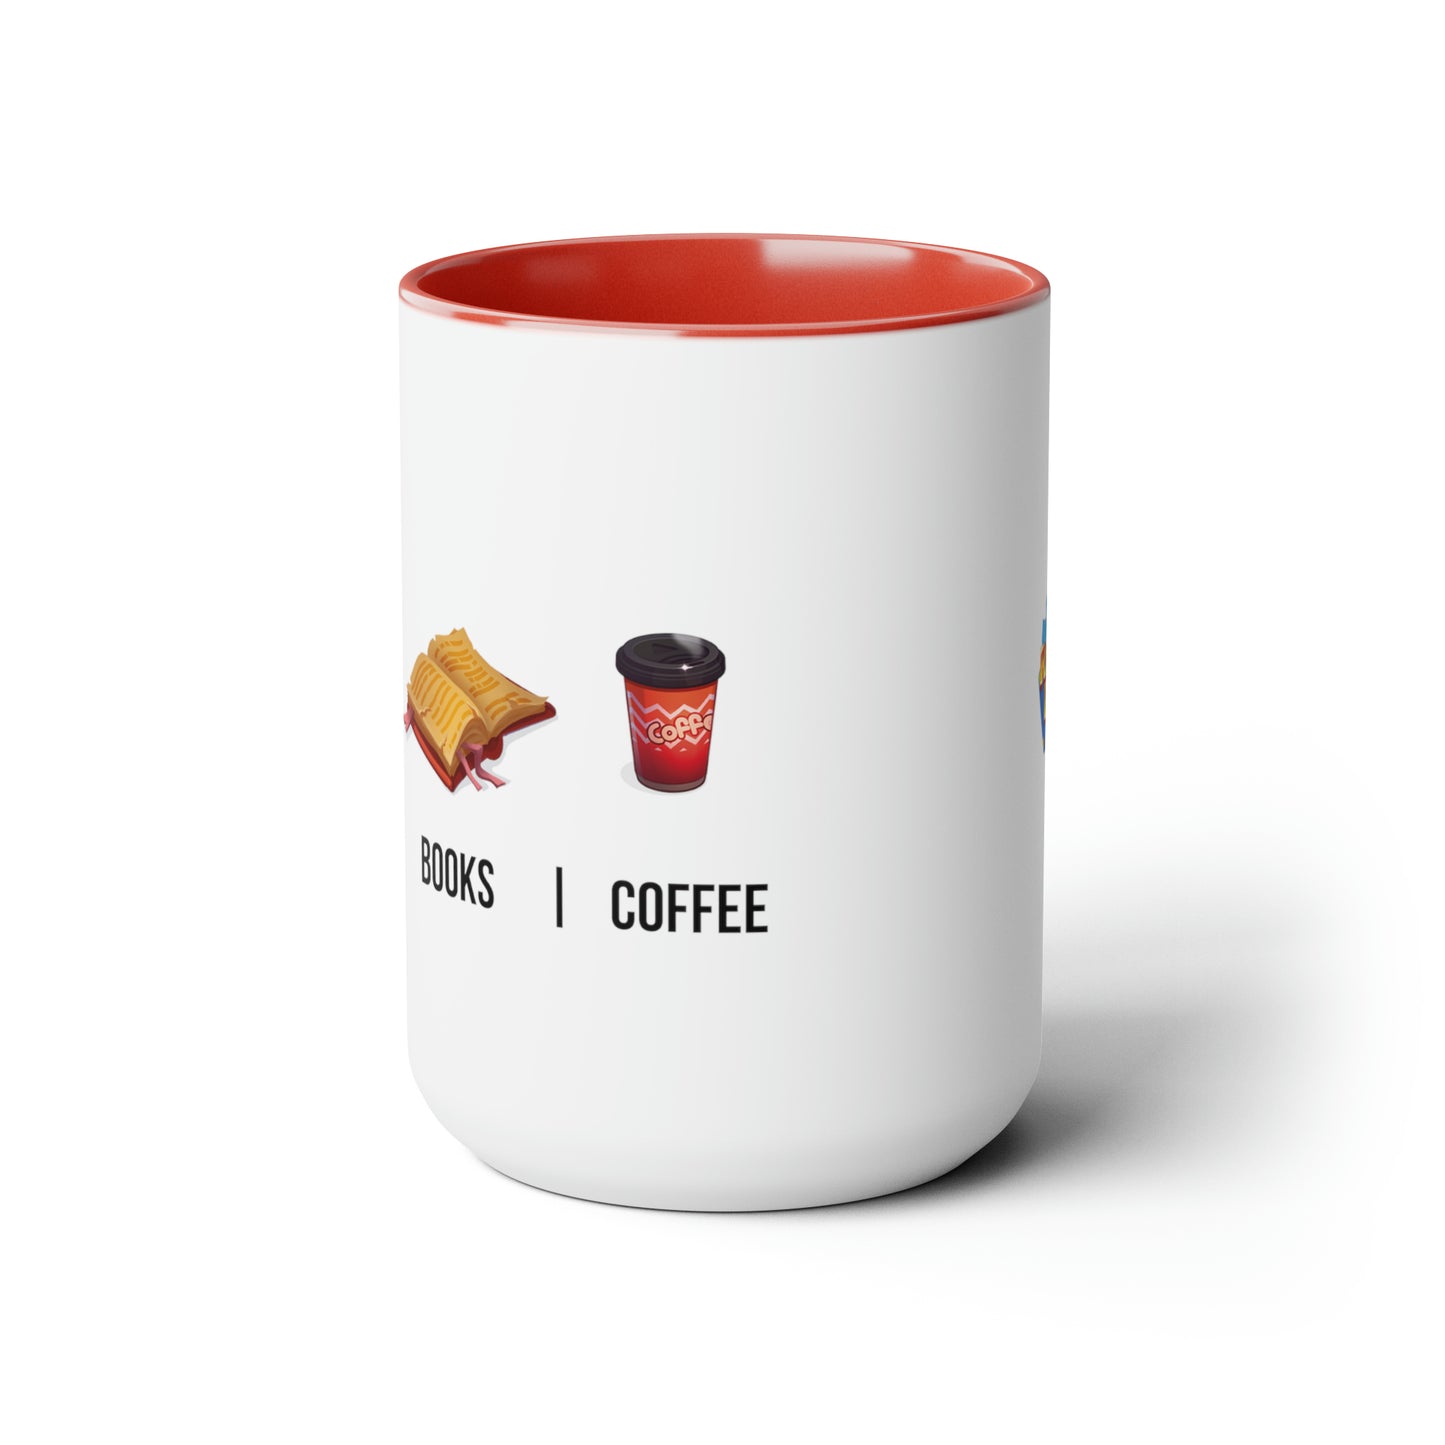 Rescue Dash Two-Tone Coffee Mugs, 15oz